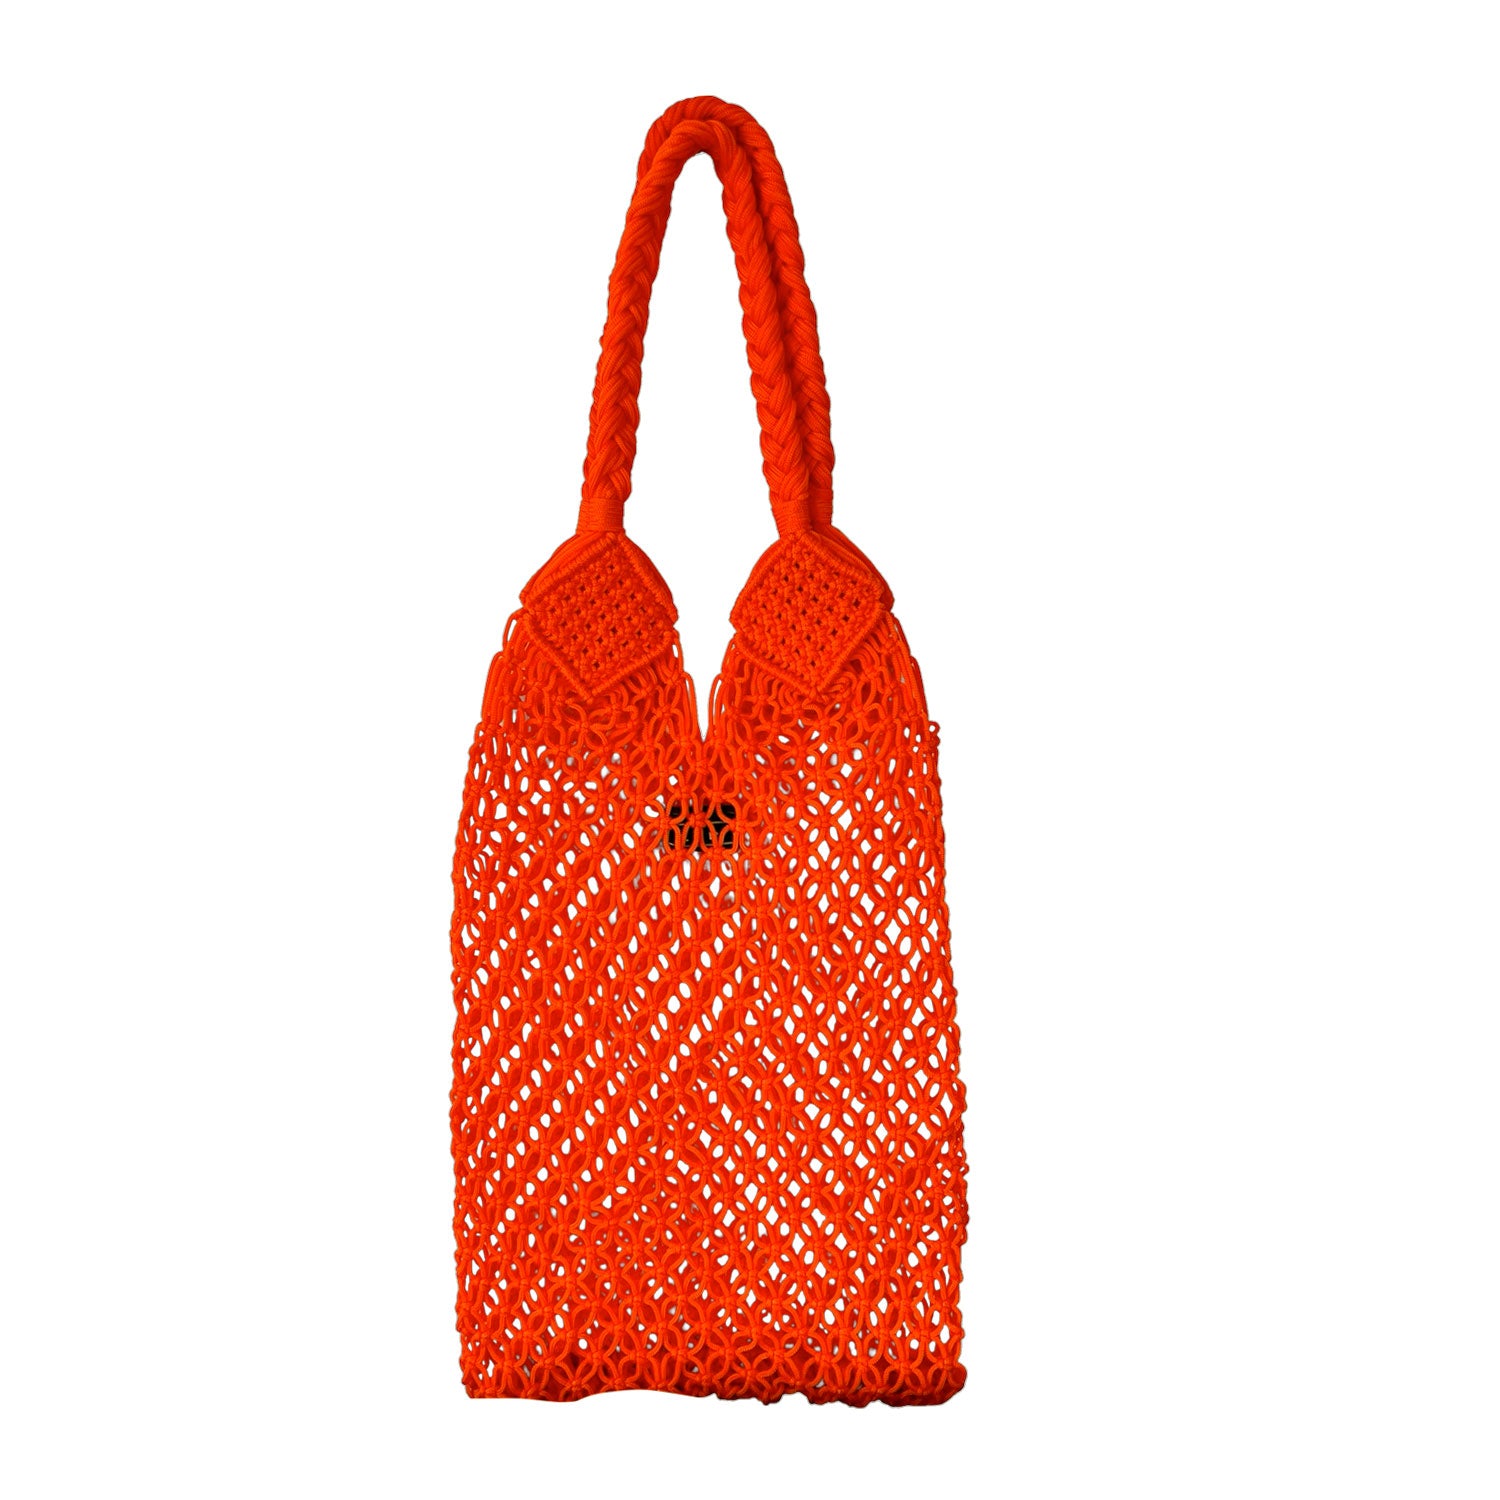 Braided Crochet Handbag in Orange